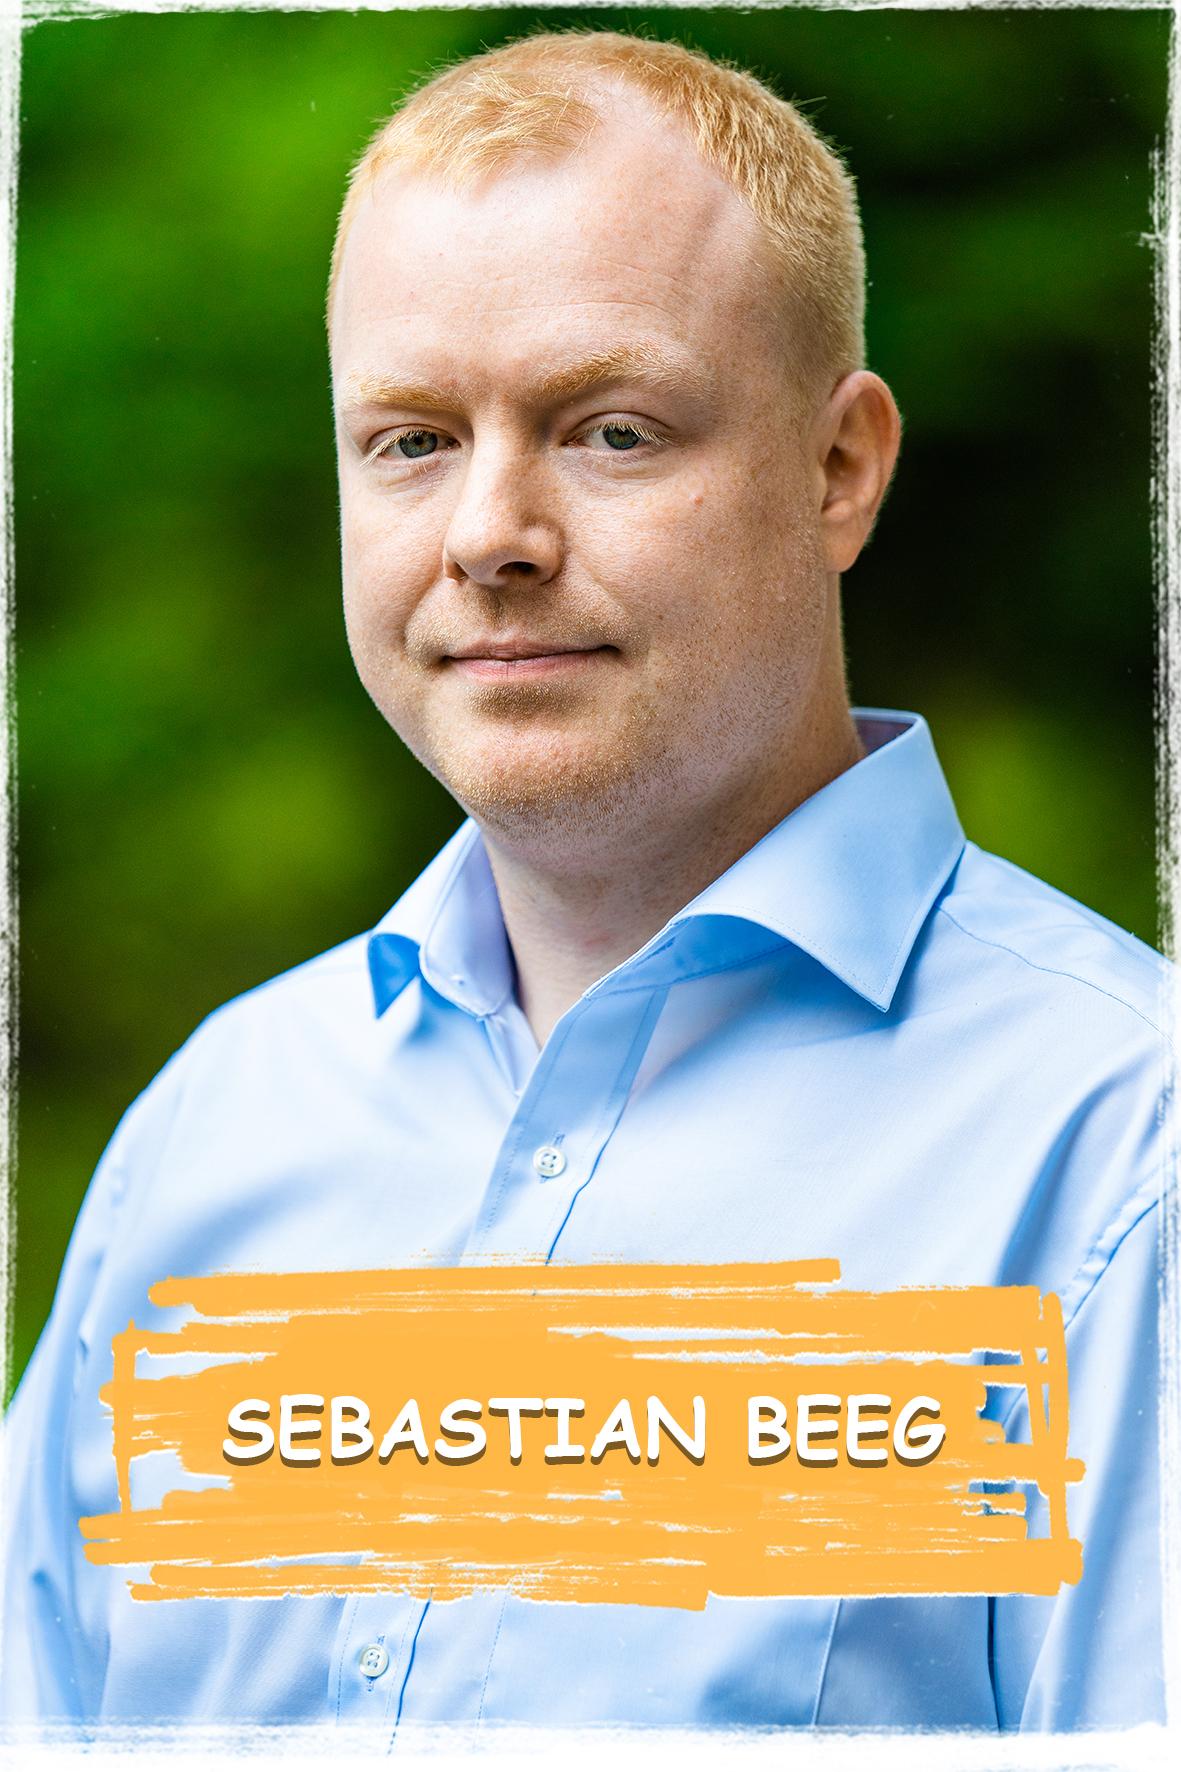 Sebastian Beeg